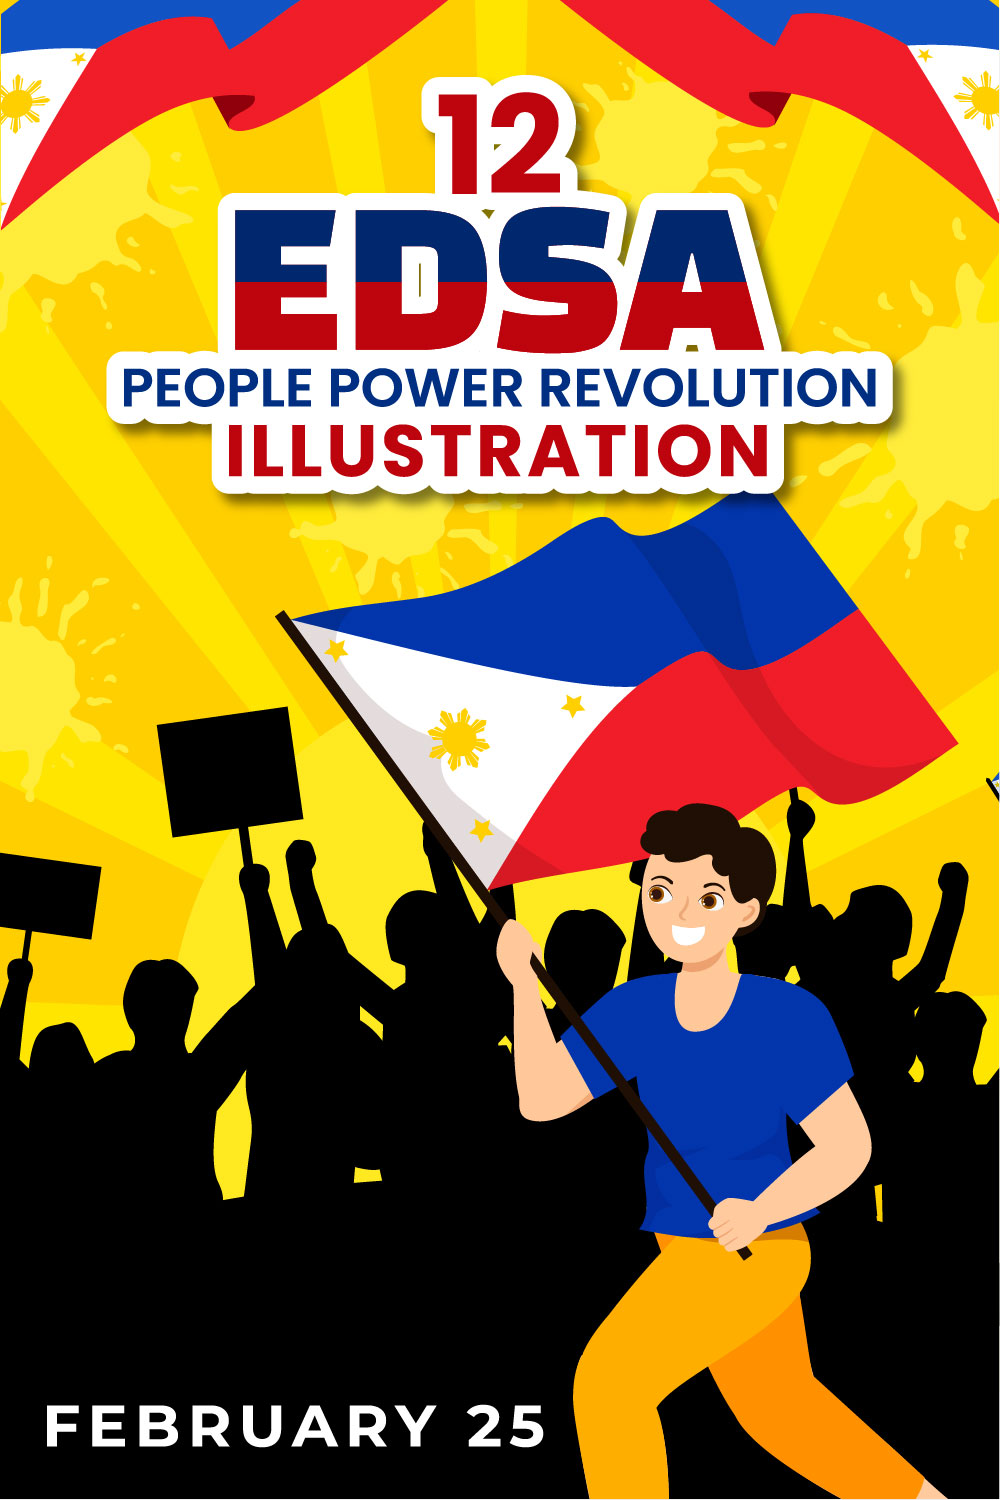 12 Edsa People Power Revolution Anniversary of Philippine Illustration pinterest preview image.